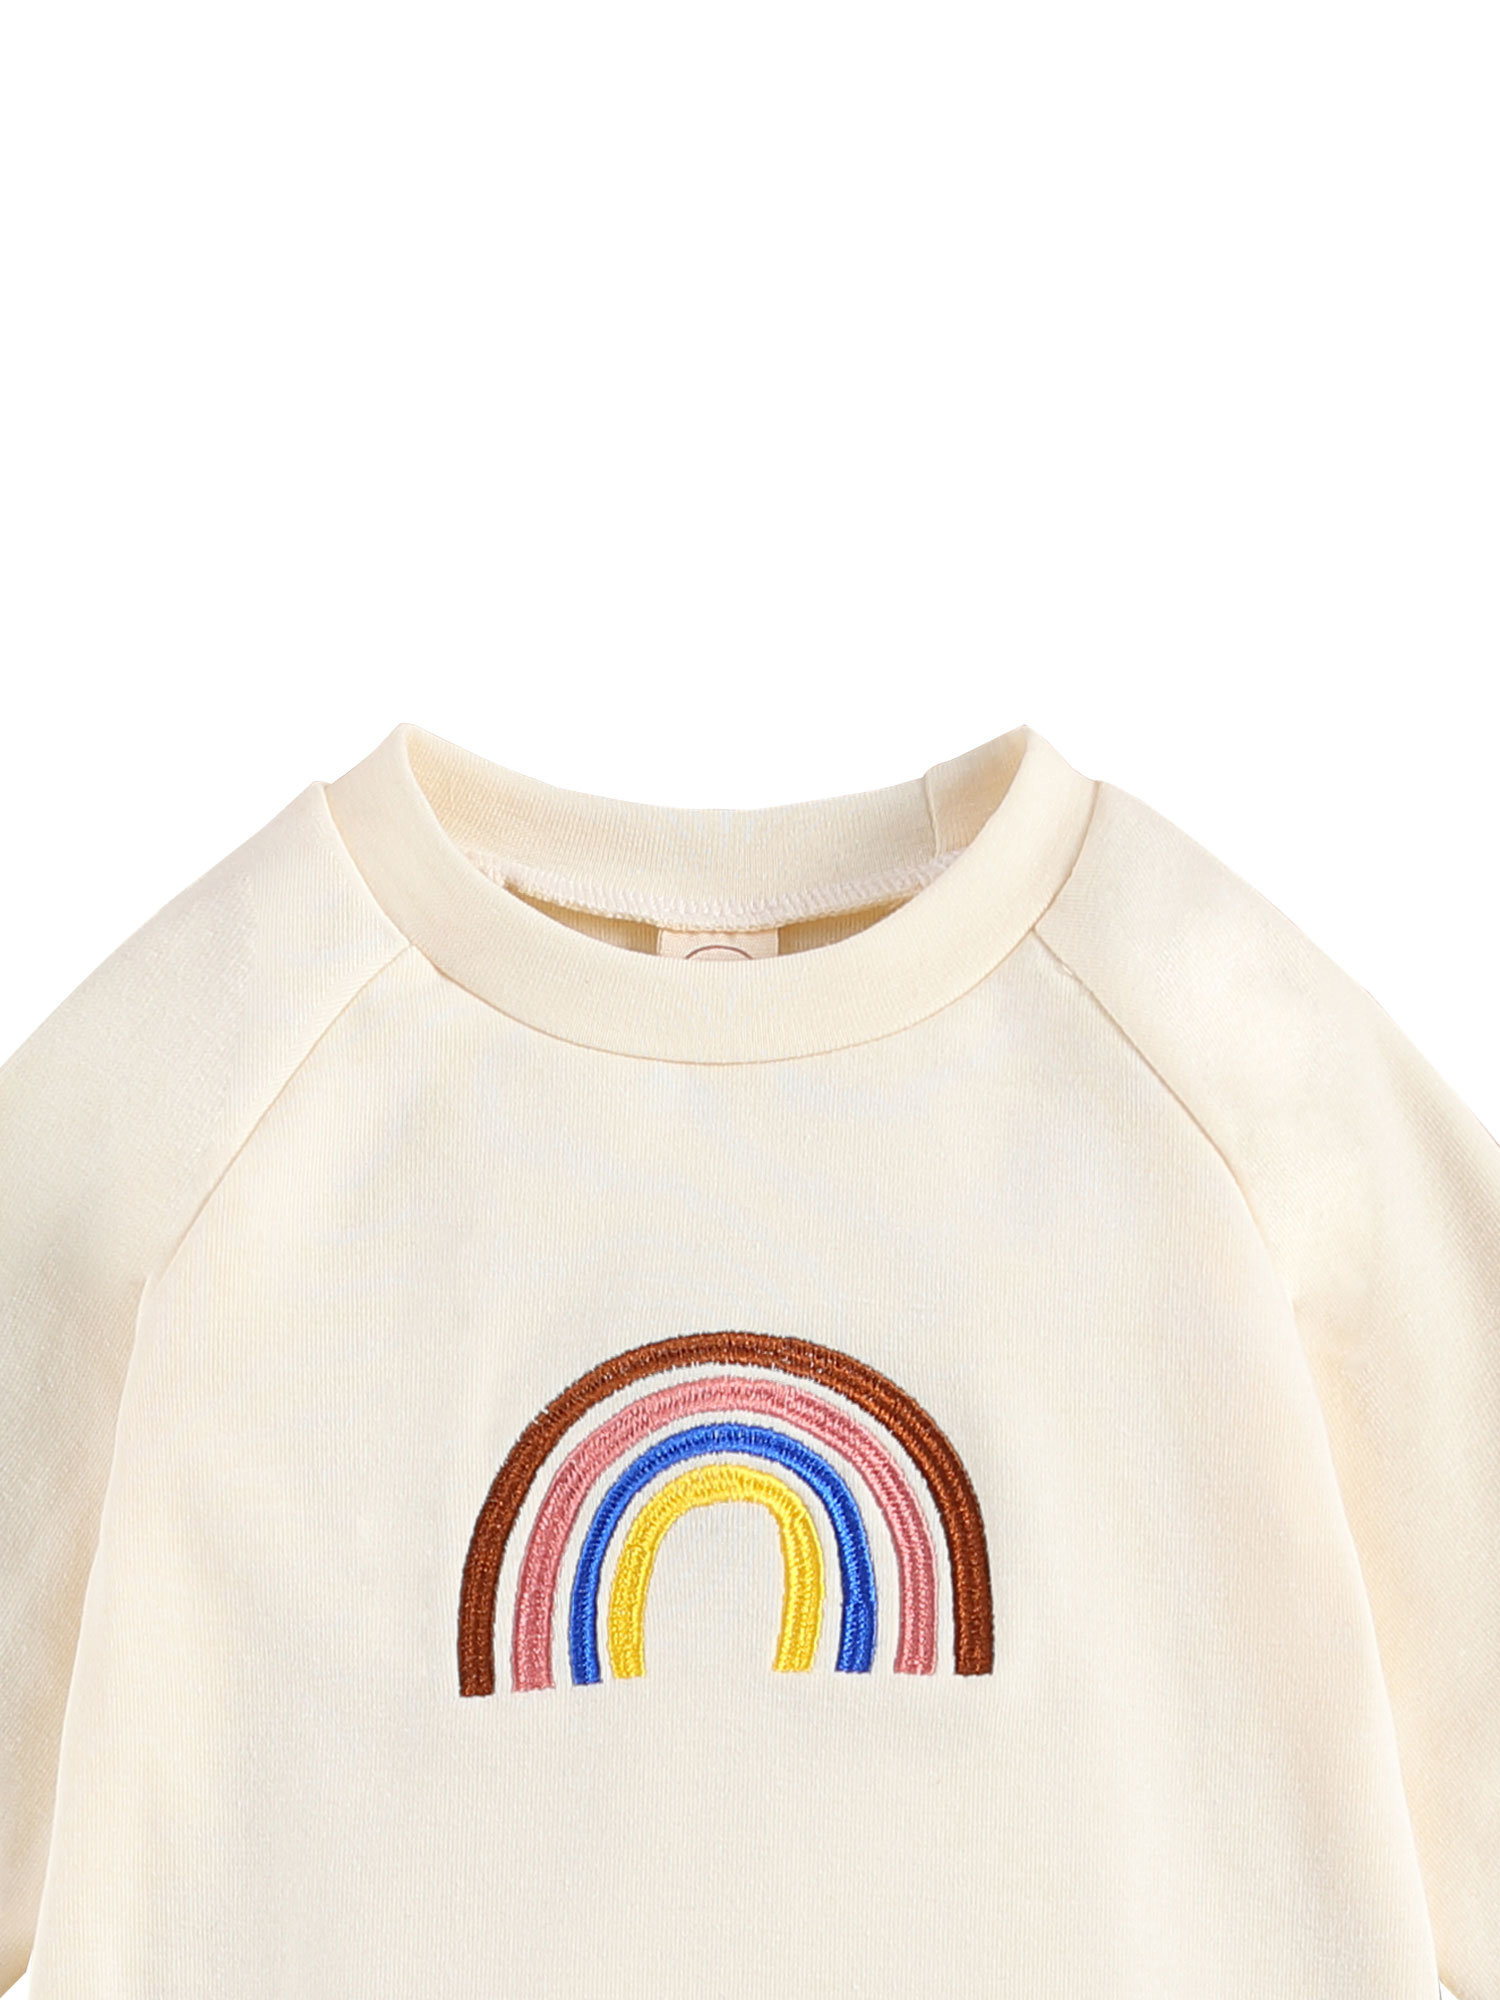 Dewadbow Newborn Baby Boys Girls Rainbow Print Romper Toddler Outfits - image 3 of 6